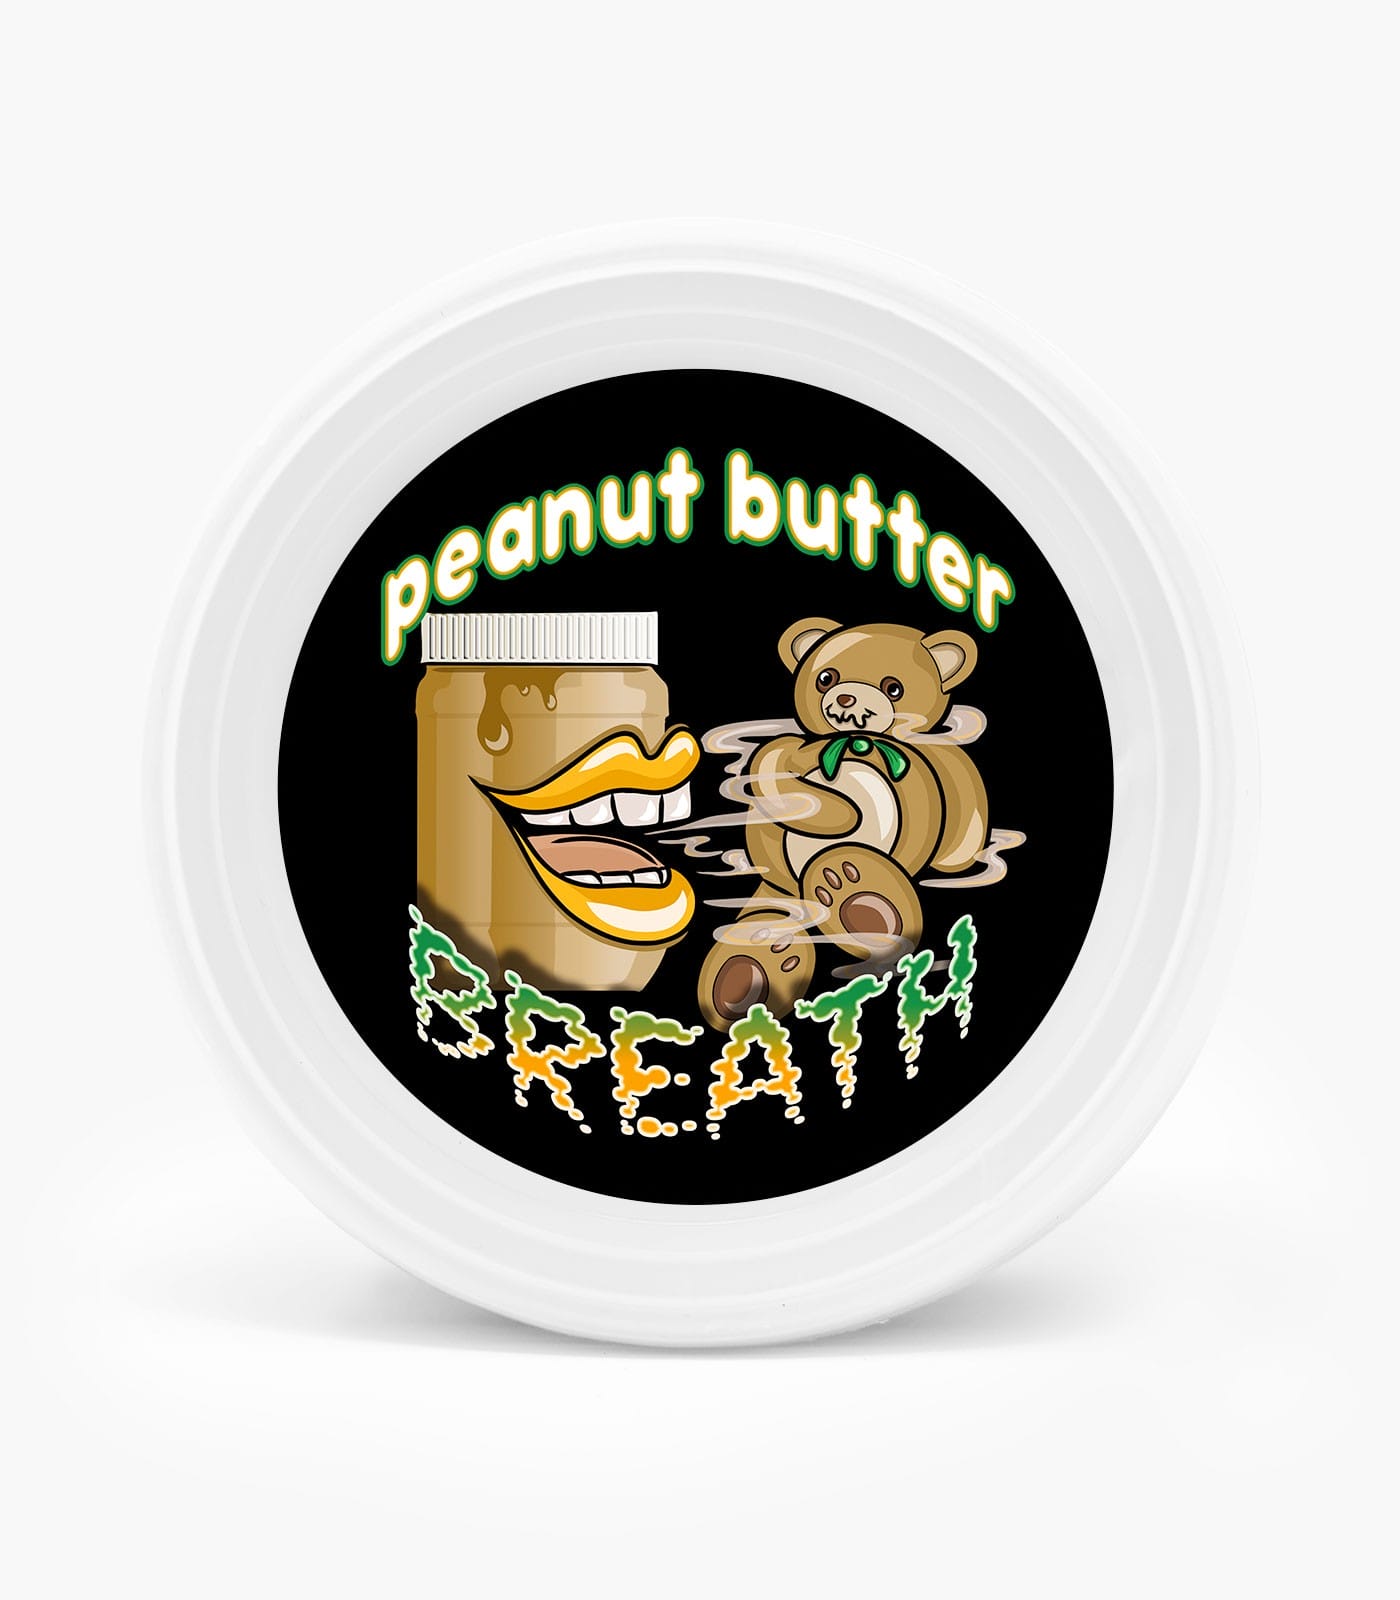 Peanut Butter Breath